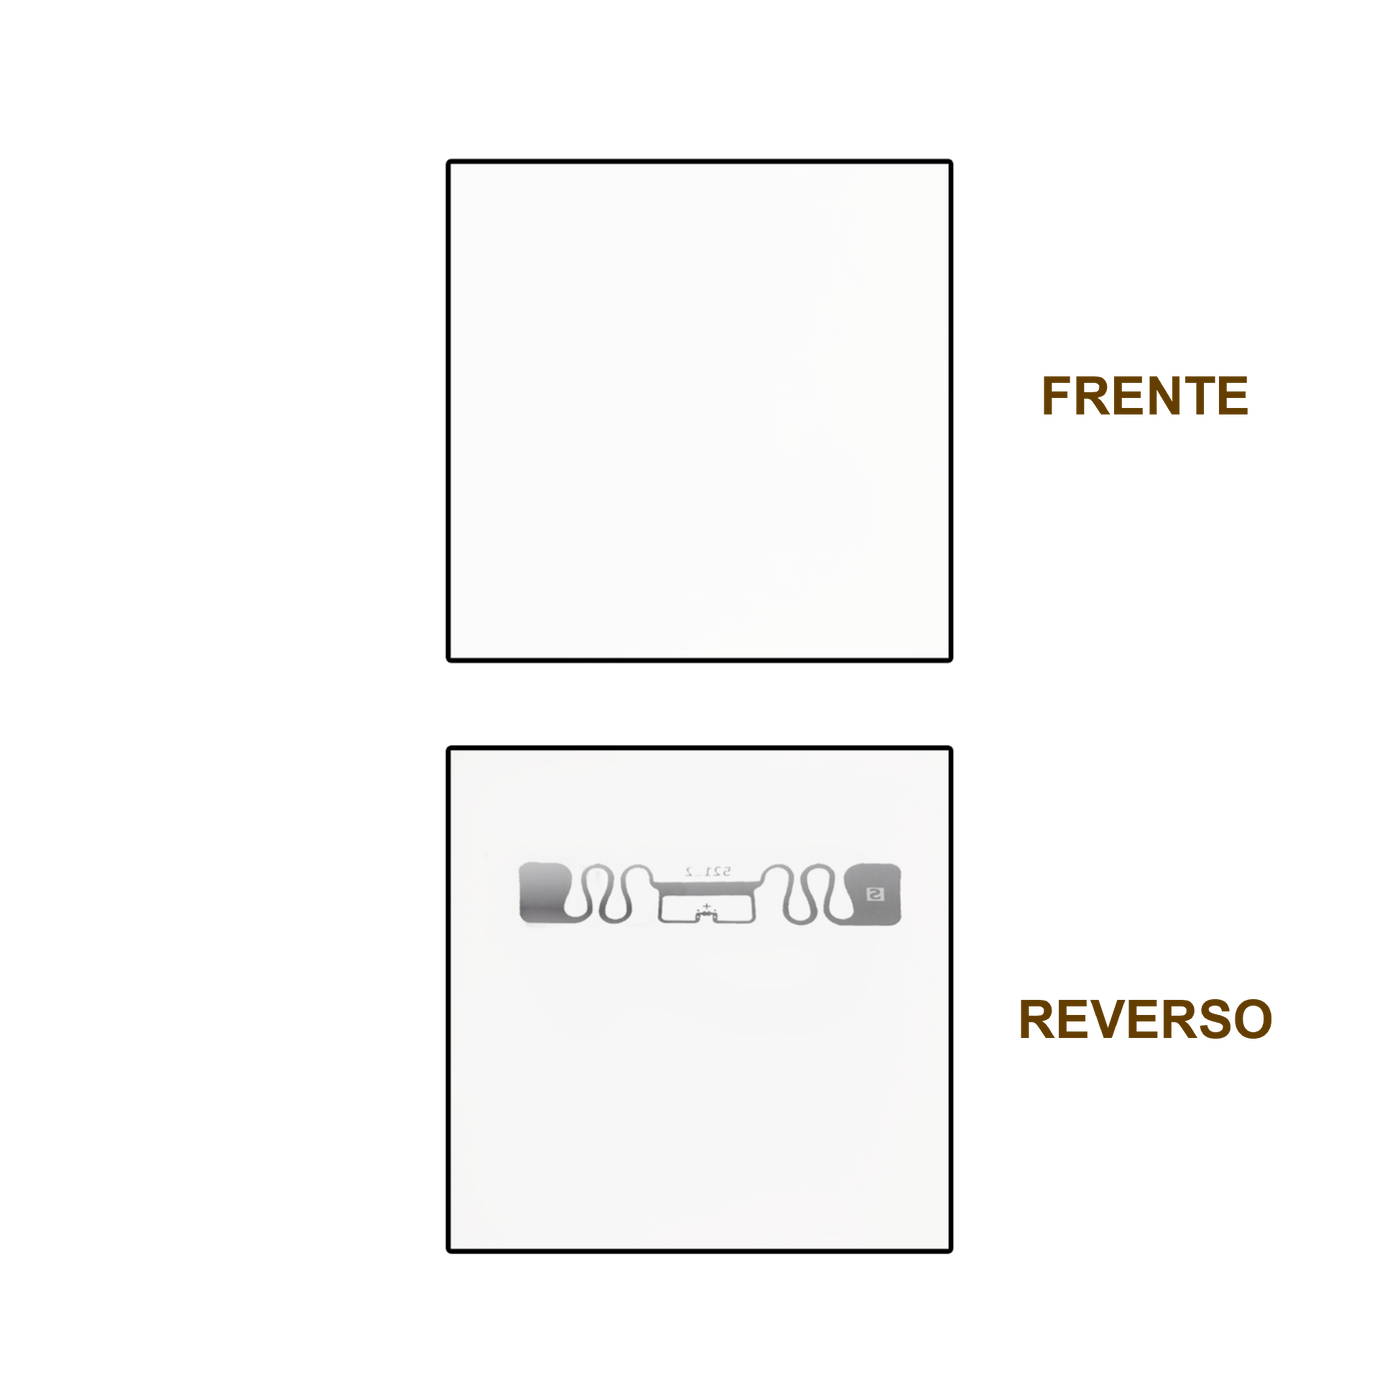 20 Millares de Etiqueta RFID TTR adherible blanca 101mm x 102 mm con inlay EPC Miniweb M730 de Avery Dennison, class 1, Gen 2, UHF 860-960 MHz, 128 Bit